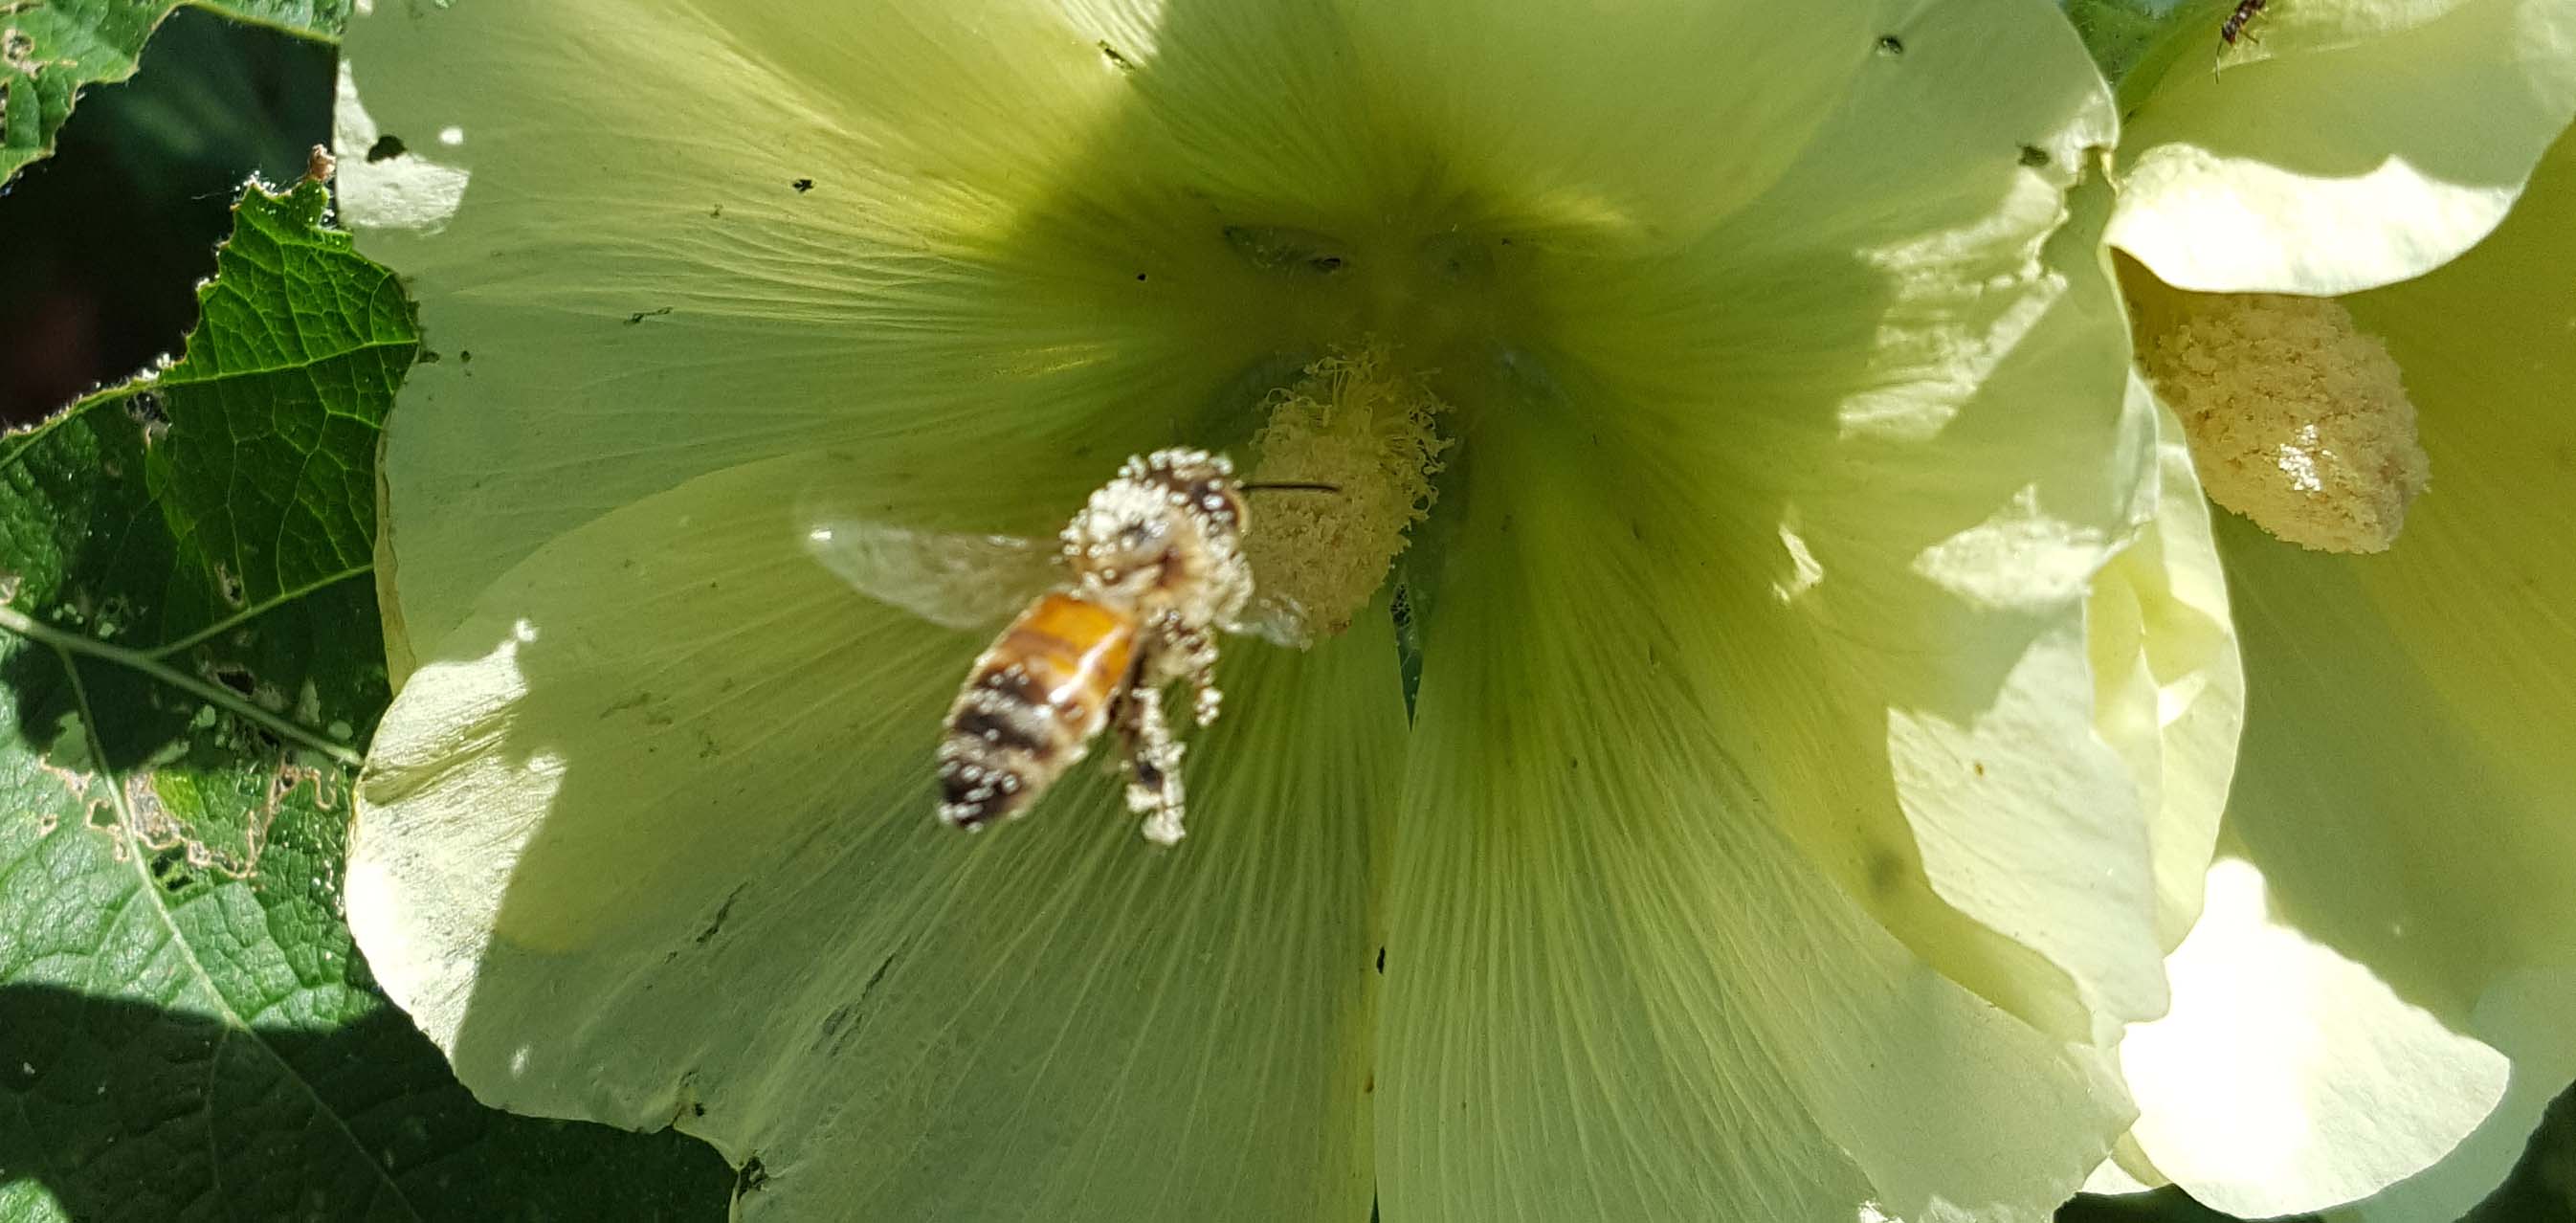 A bumblebee pollinates a flower